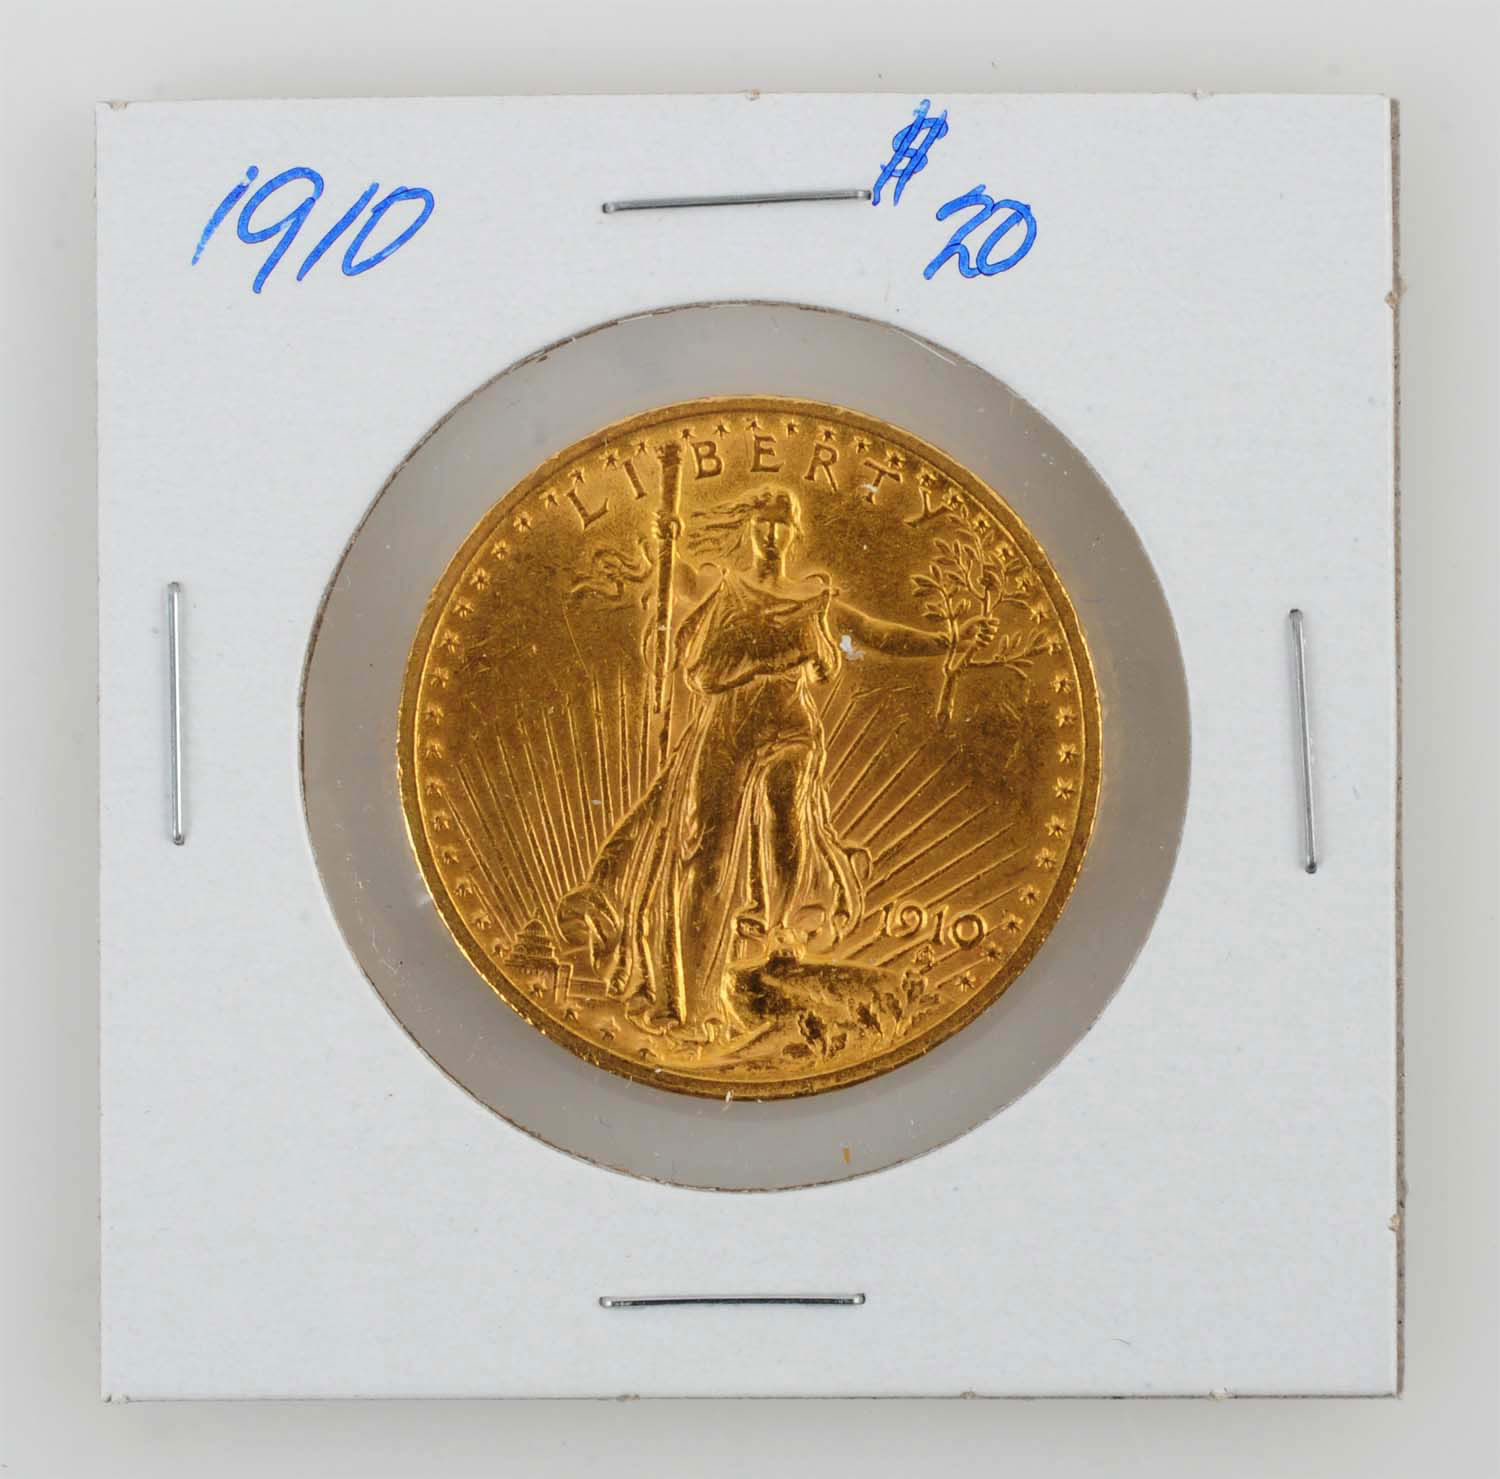 1910 $20 Saint-Gaudens gold coin, MS 62. Estimate: $1,200-$1,400. Morphy Auctions image